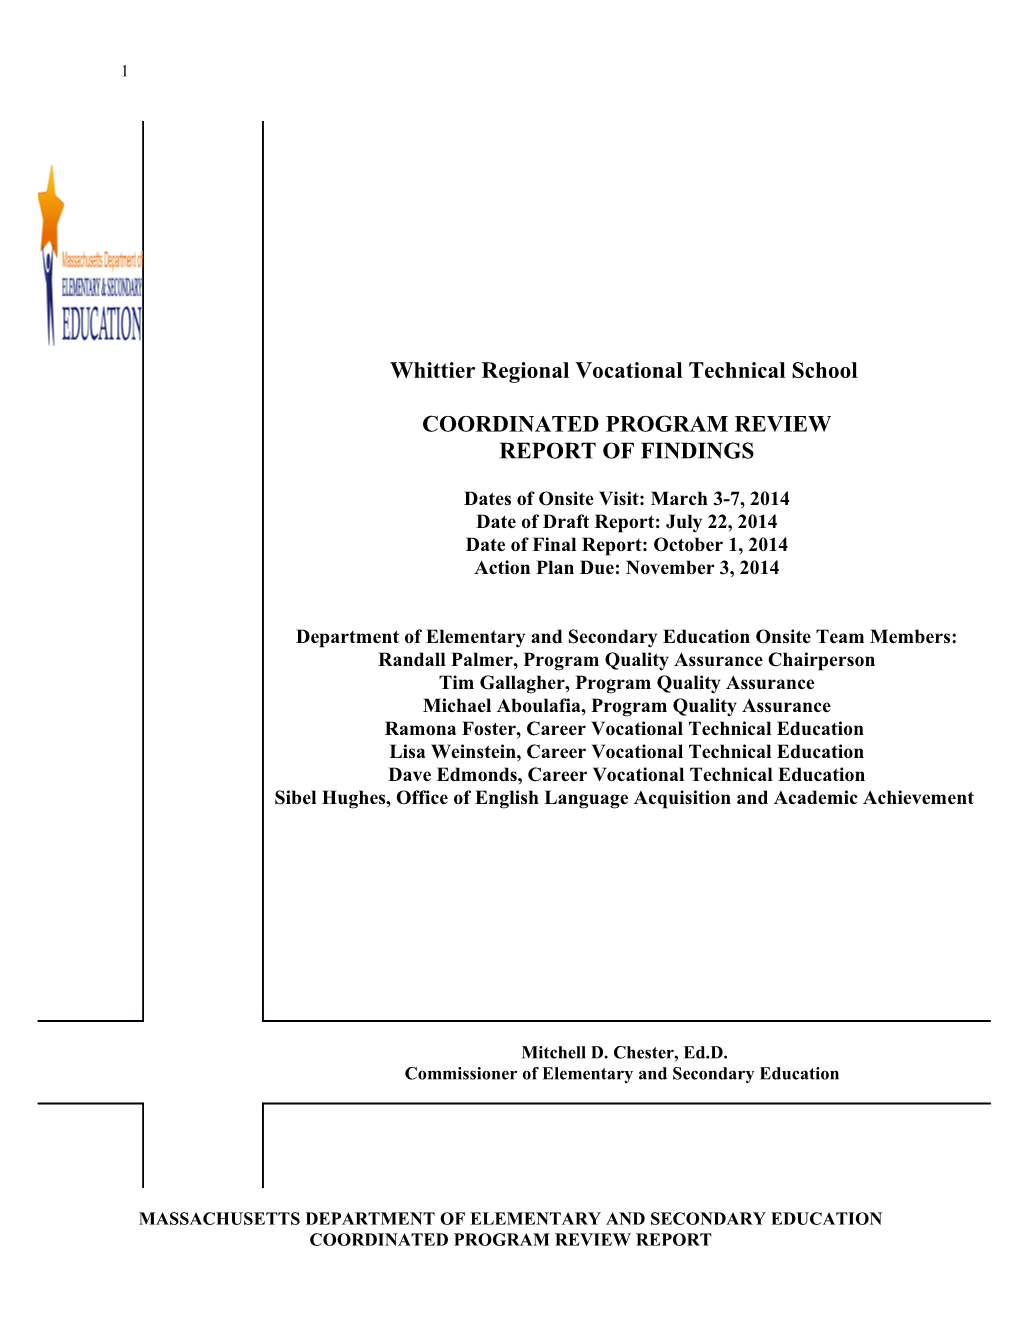 Whittier RVTS CPR Final Report 2014